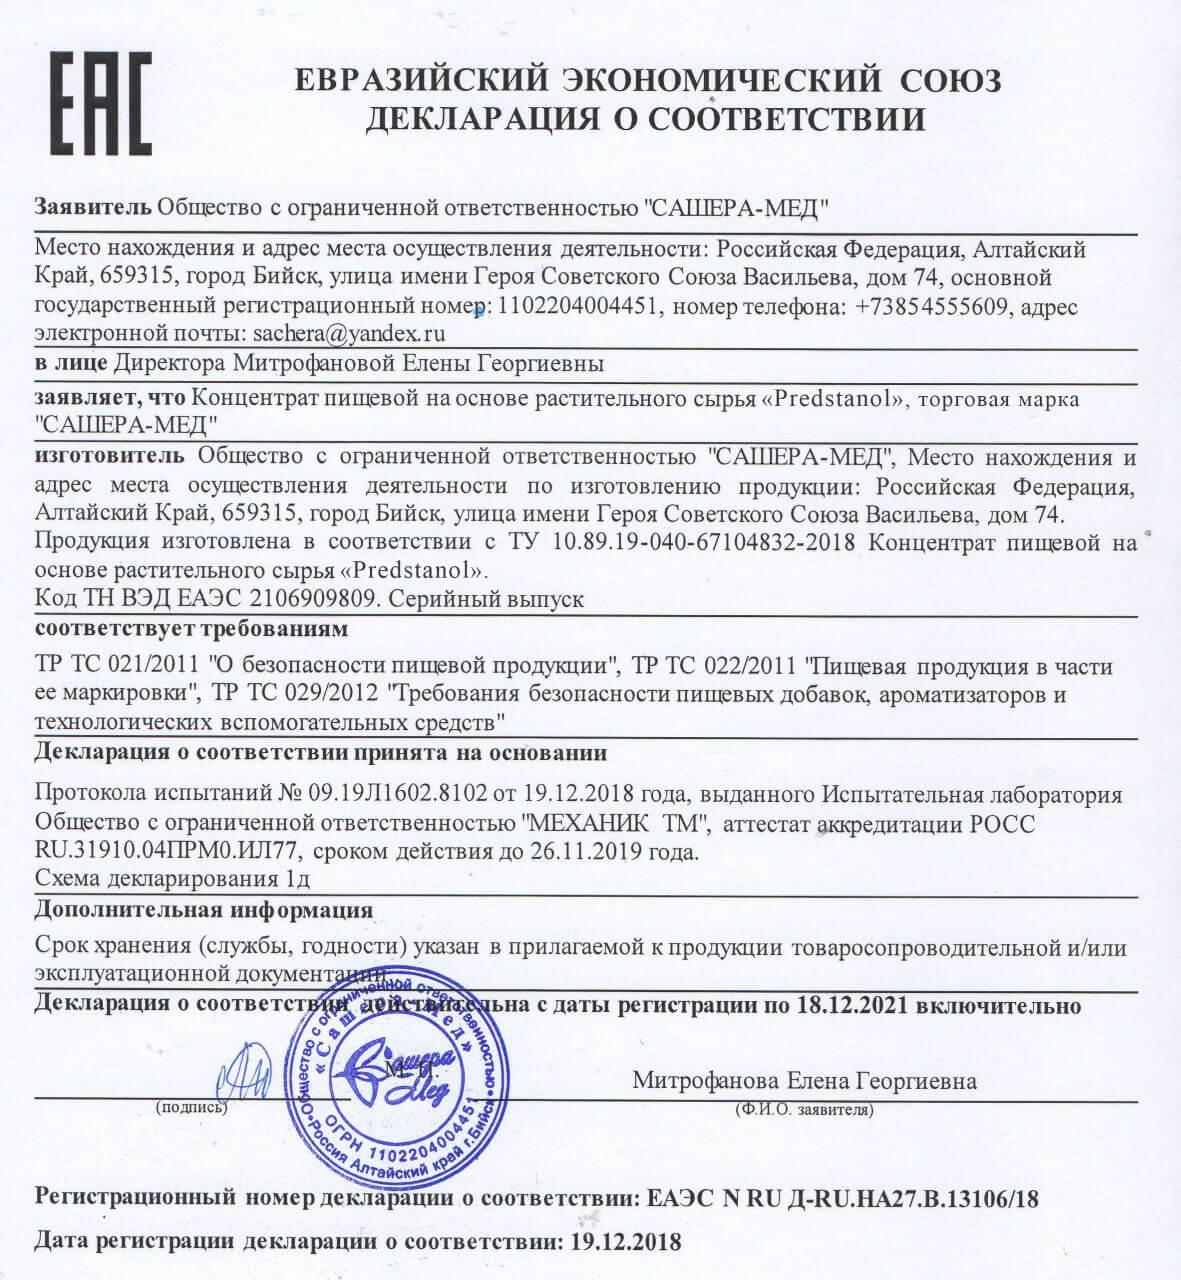 Сертификат на предстанол в Москве